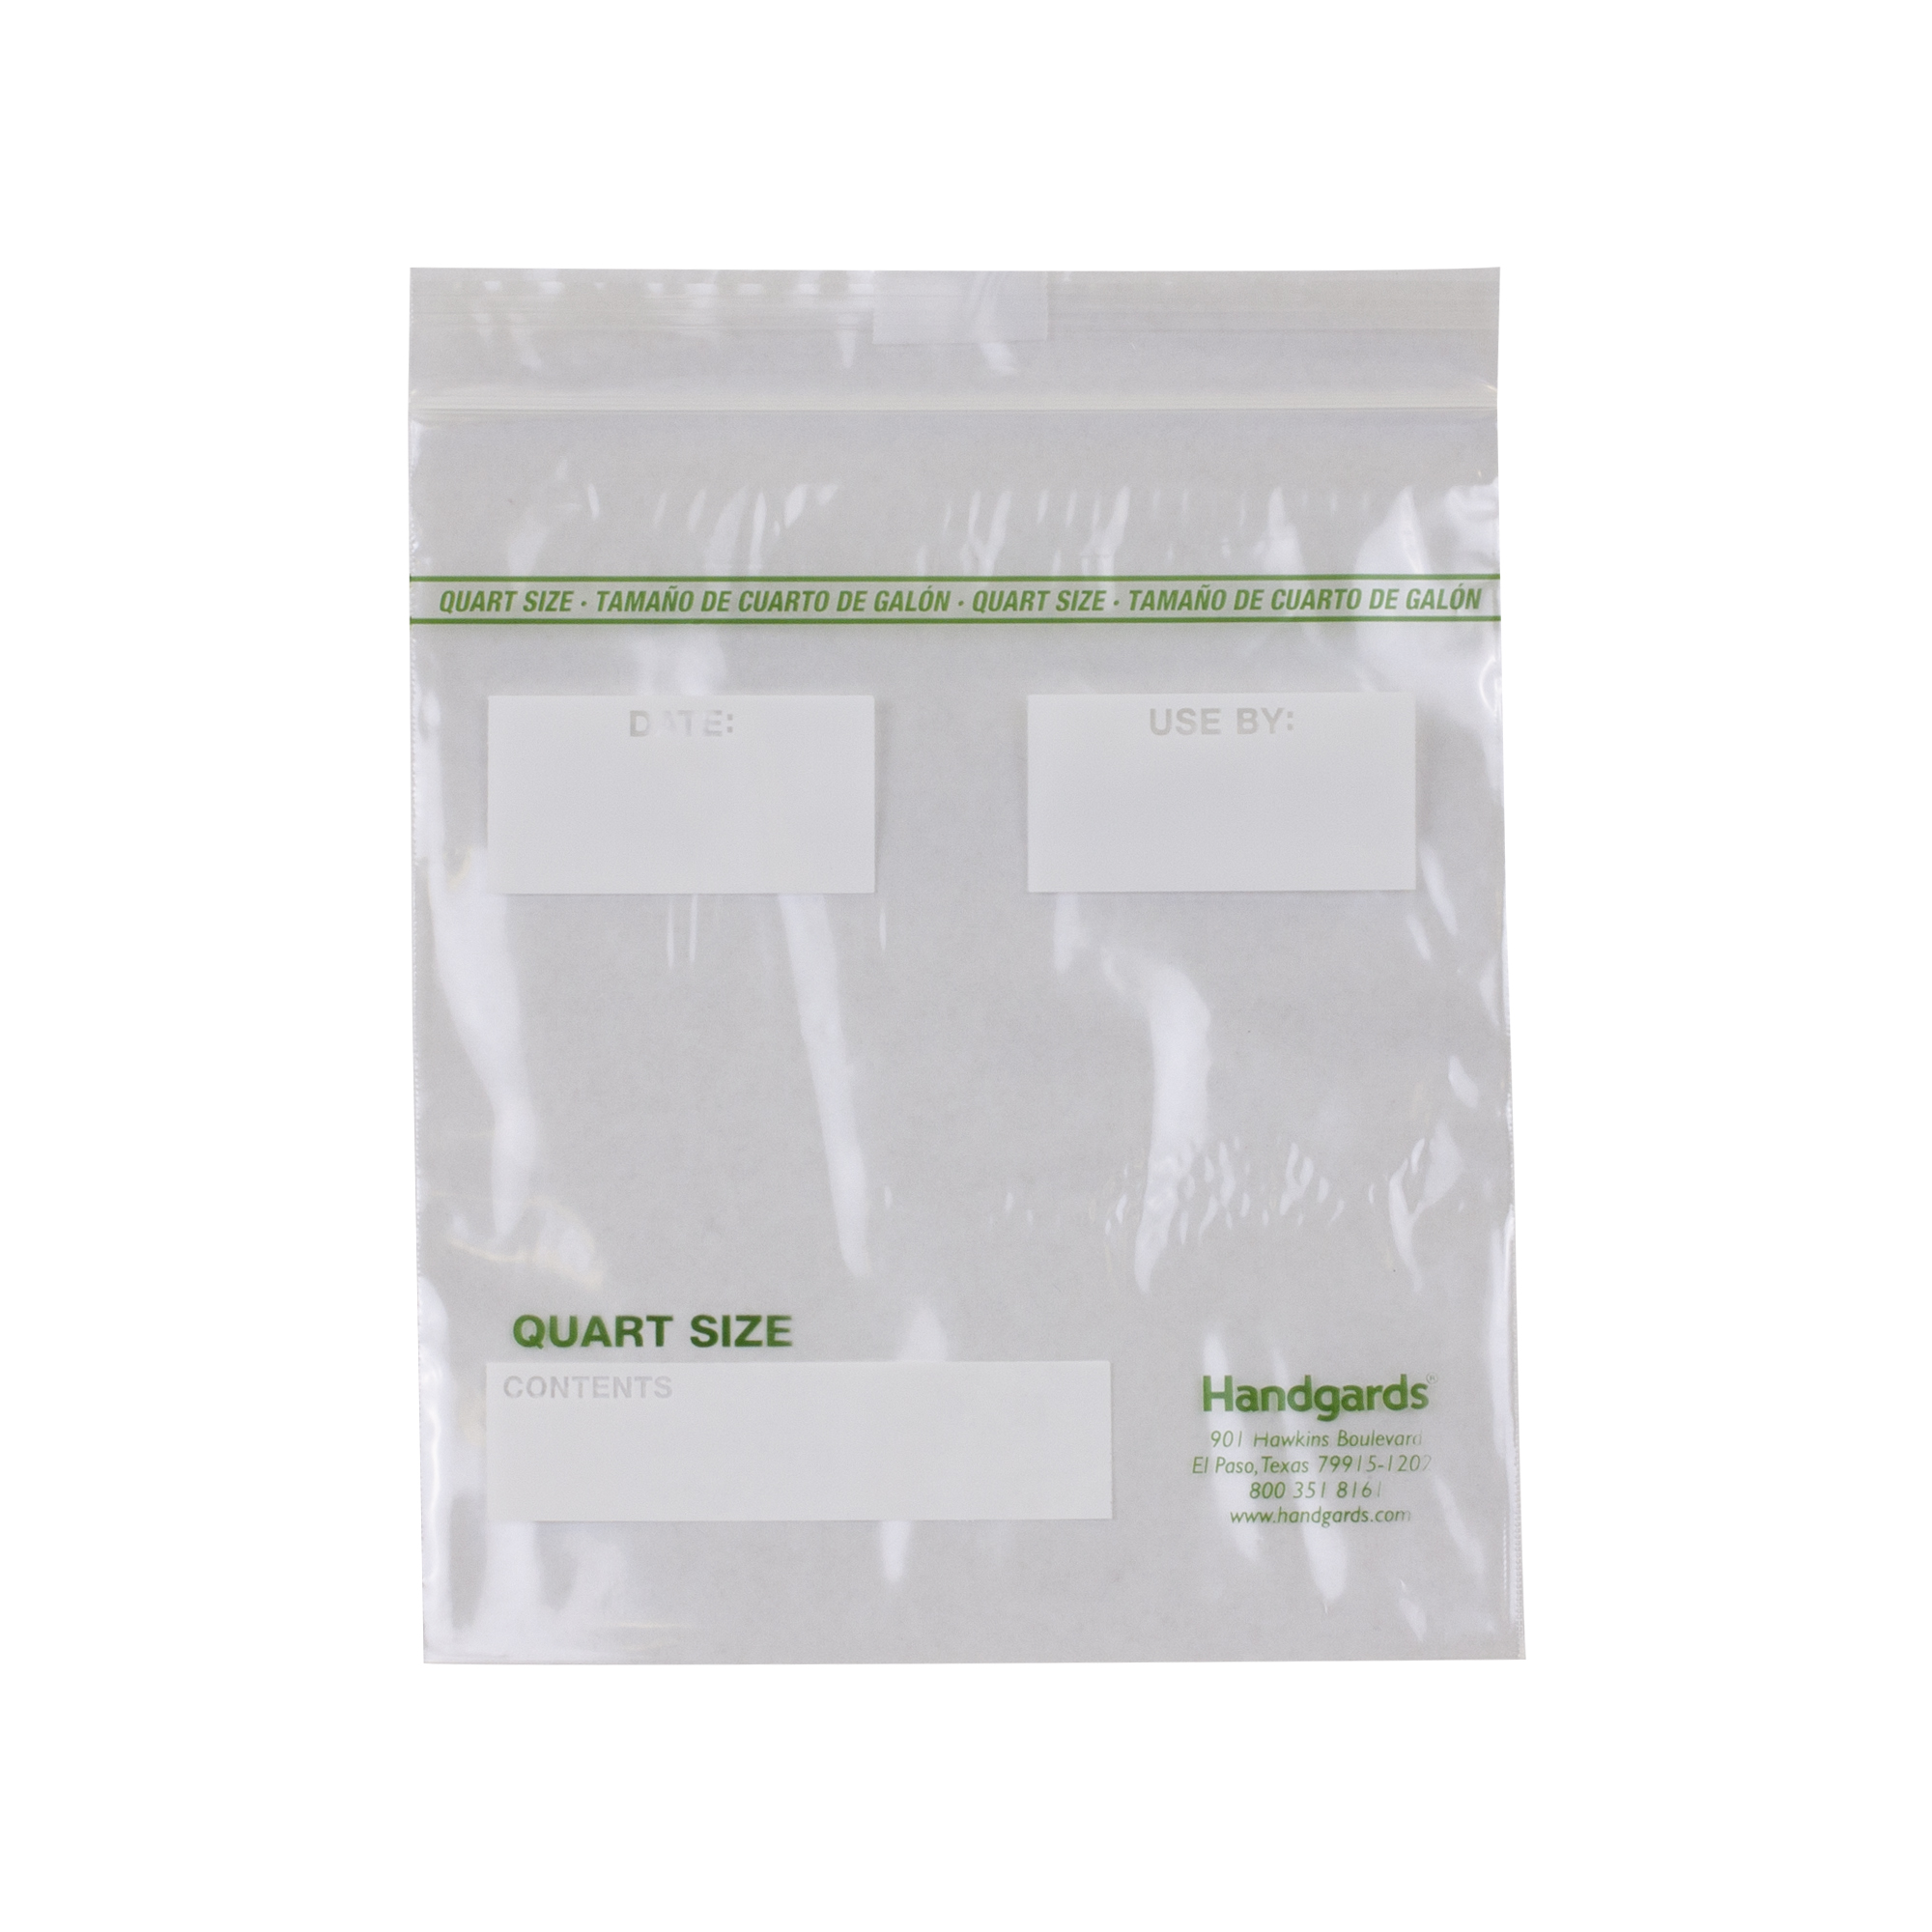 Zipgards® High Density Disposable Reclosable Bags – 2 Gallon Size –  Handgards®